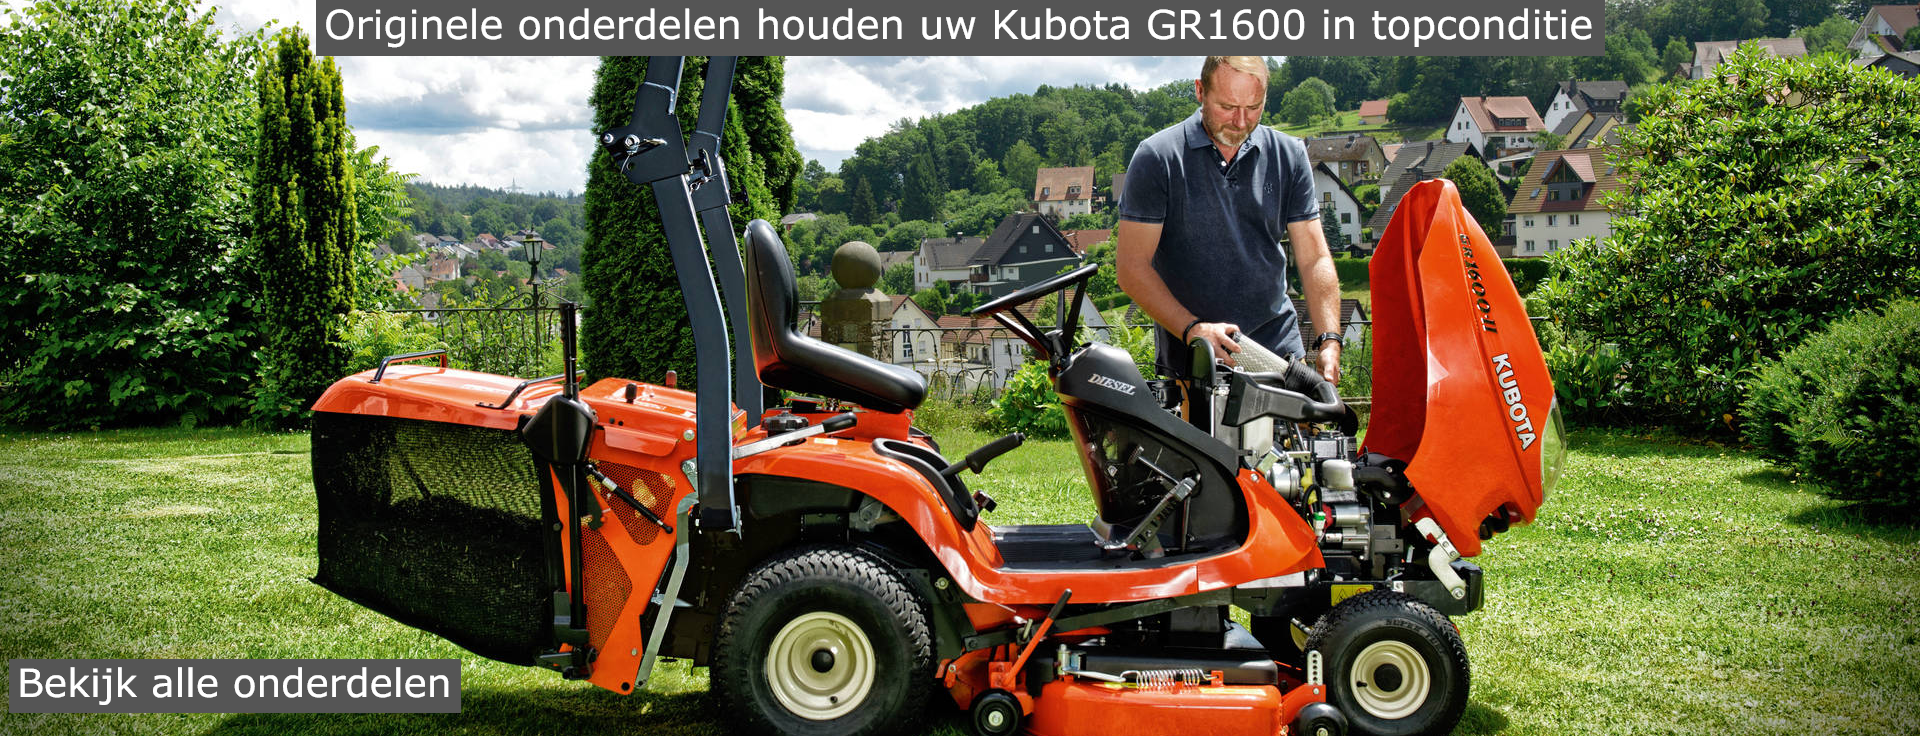 Kubota GR1600 onderdelen webshop